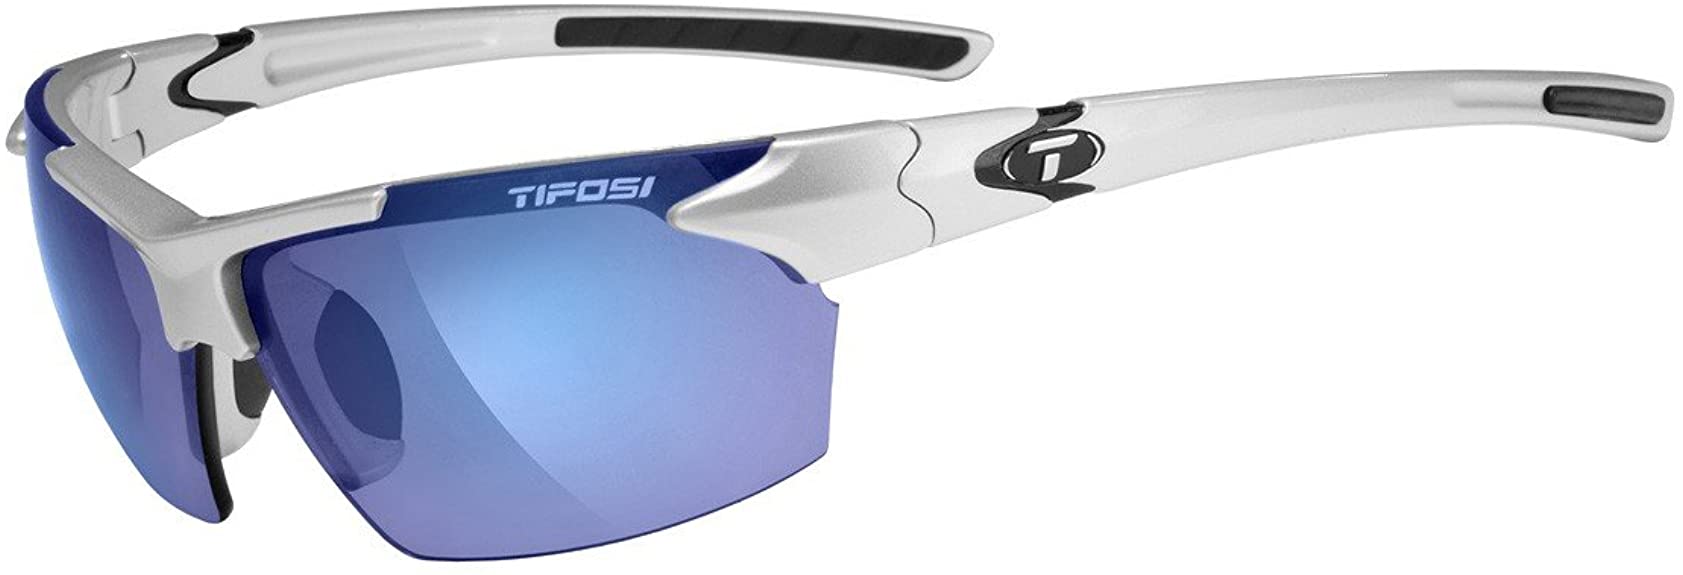 Womens Tifosi Jet Shatterproof Golf Sunglasses